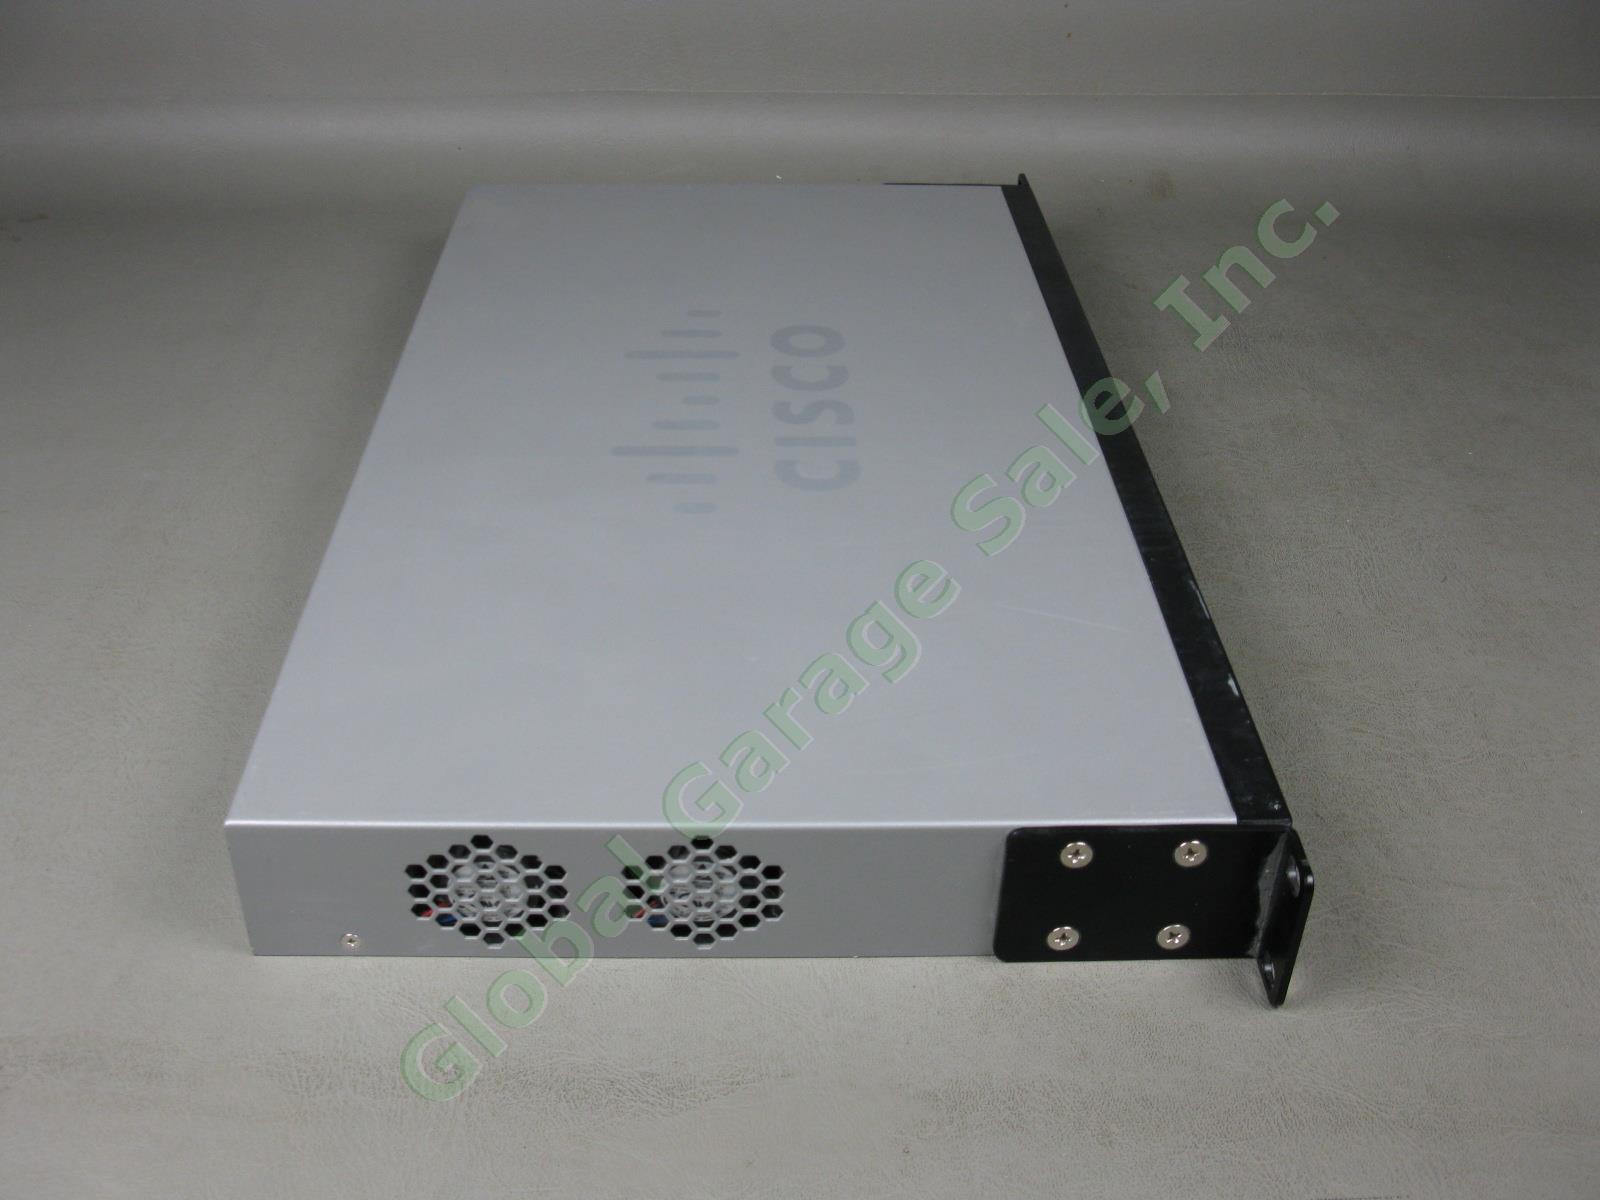 Cisco Small Business SG300-52 Port Gigabit Managed Ethernet Switch SRW2048-K9VO1 4